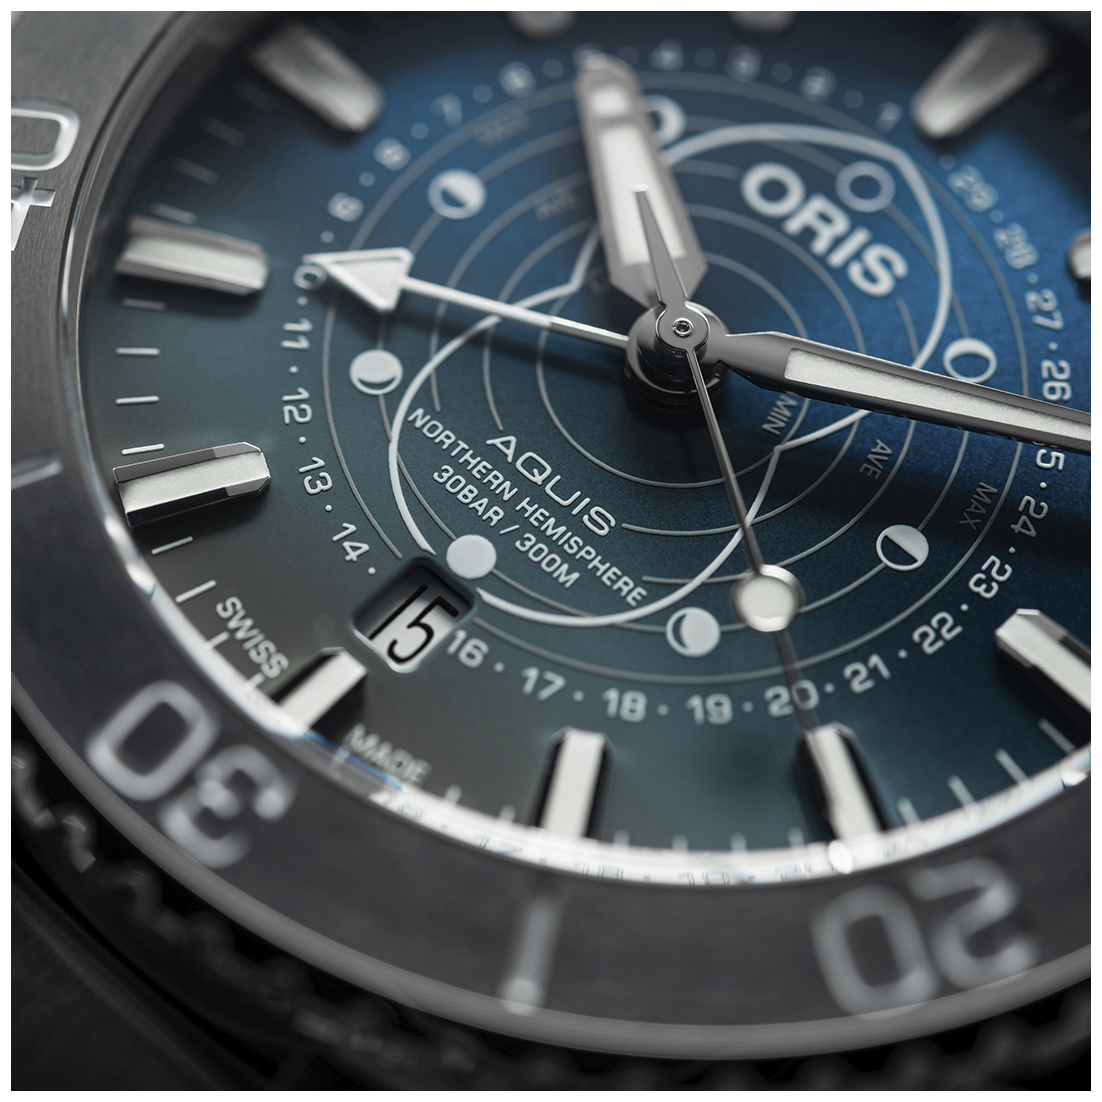 The Oris Das Watt Limited Edition Watch